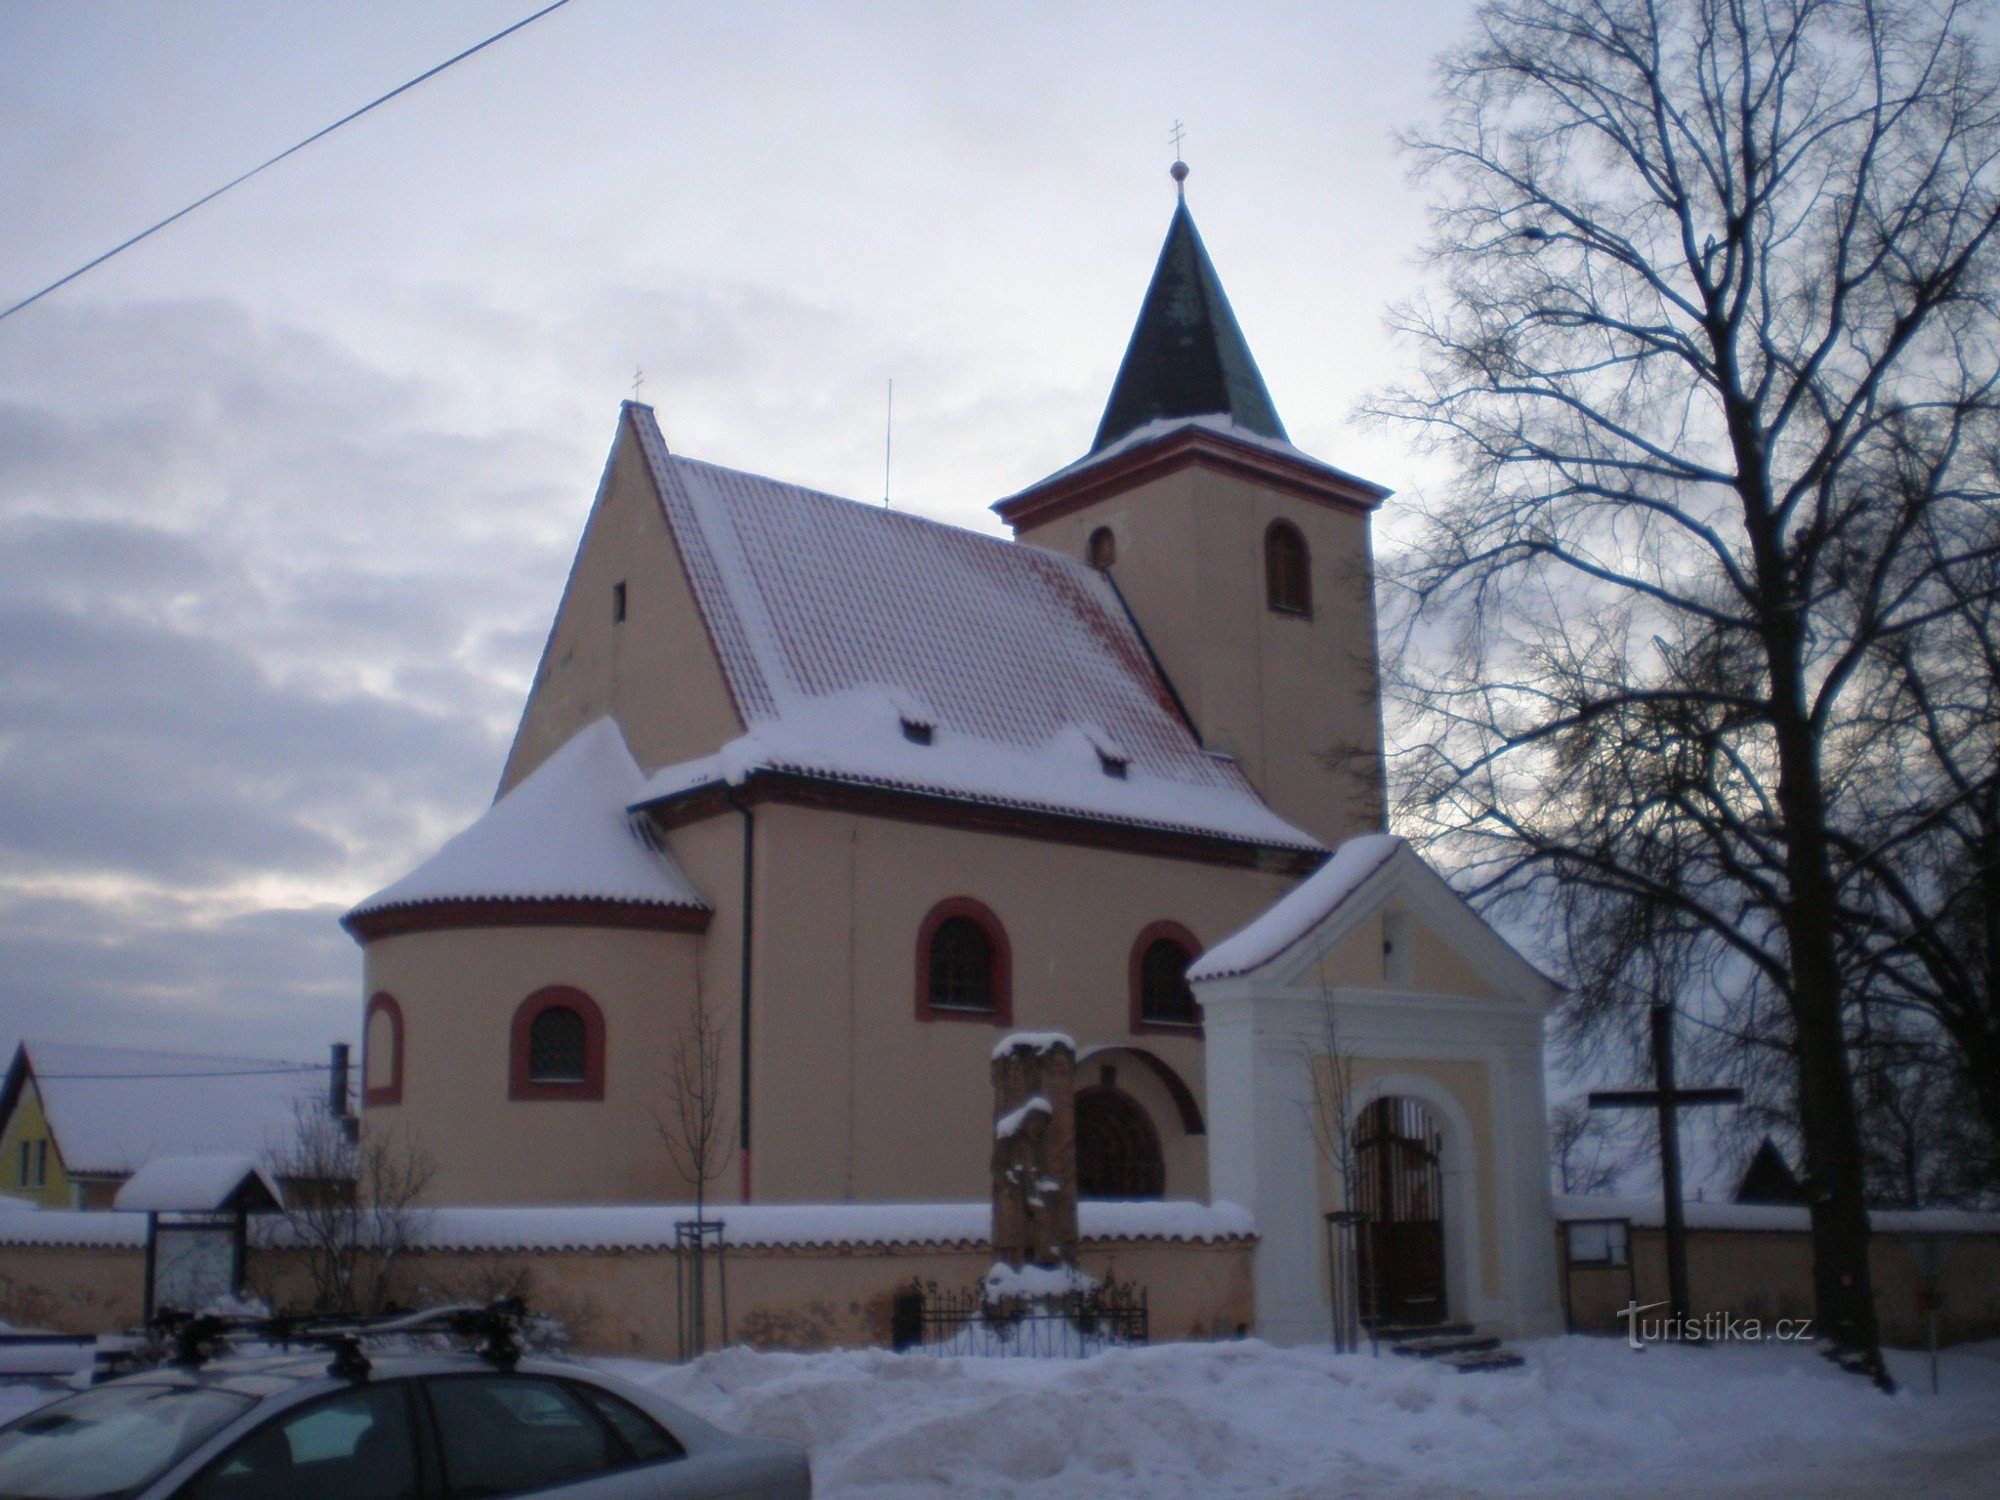 Hrusice - εκκλησία του Αγ. Wenceslas